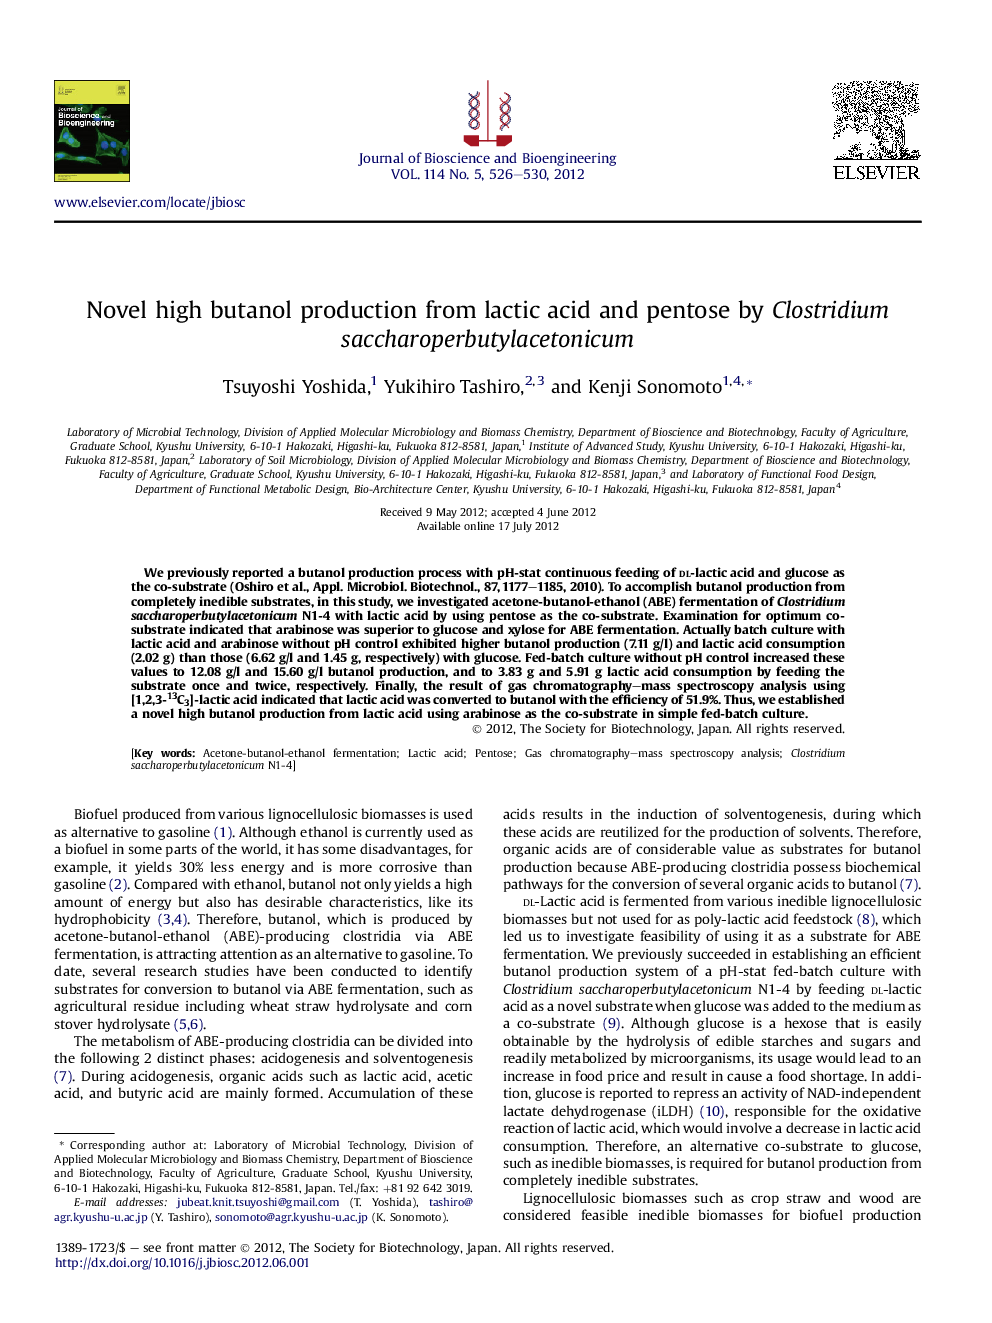 Novel high butanol production from lactic acid and pentose by Clostridium saccharoperbutylacetonicum